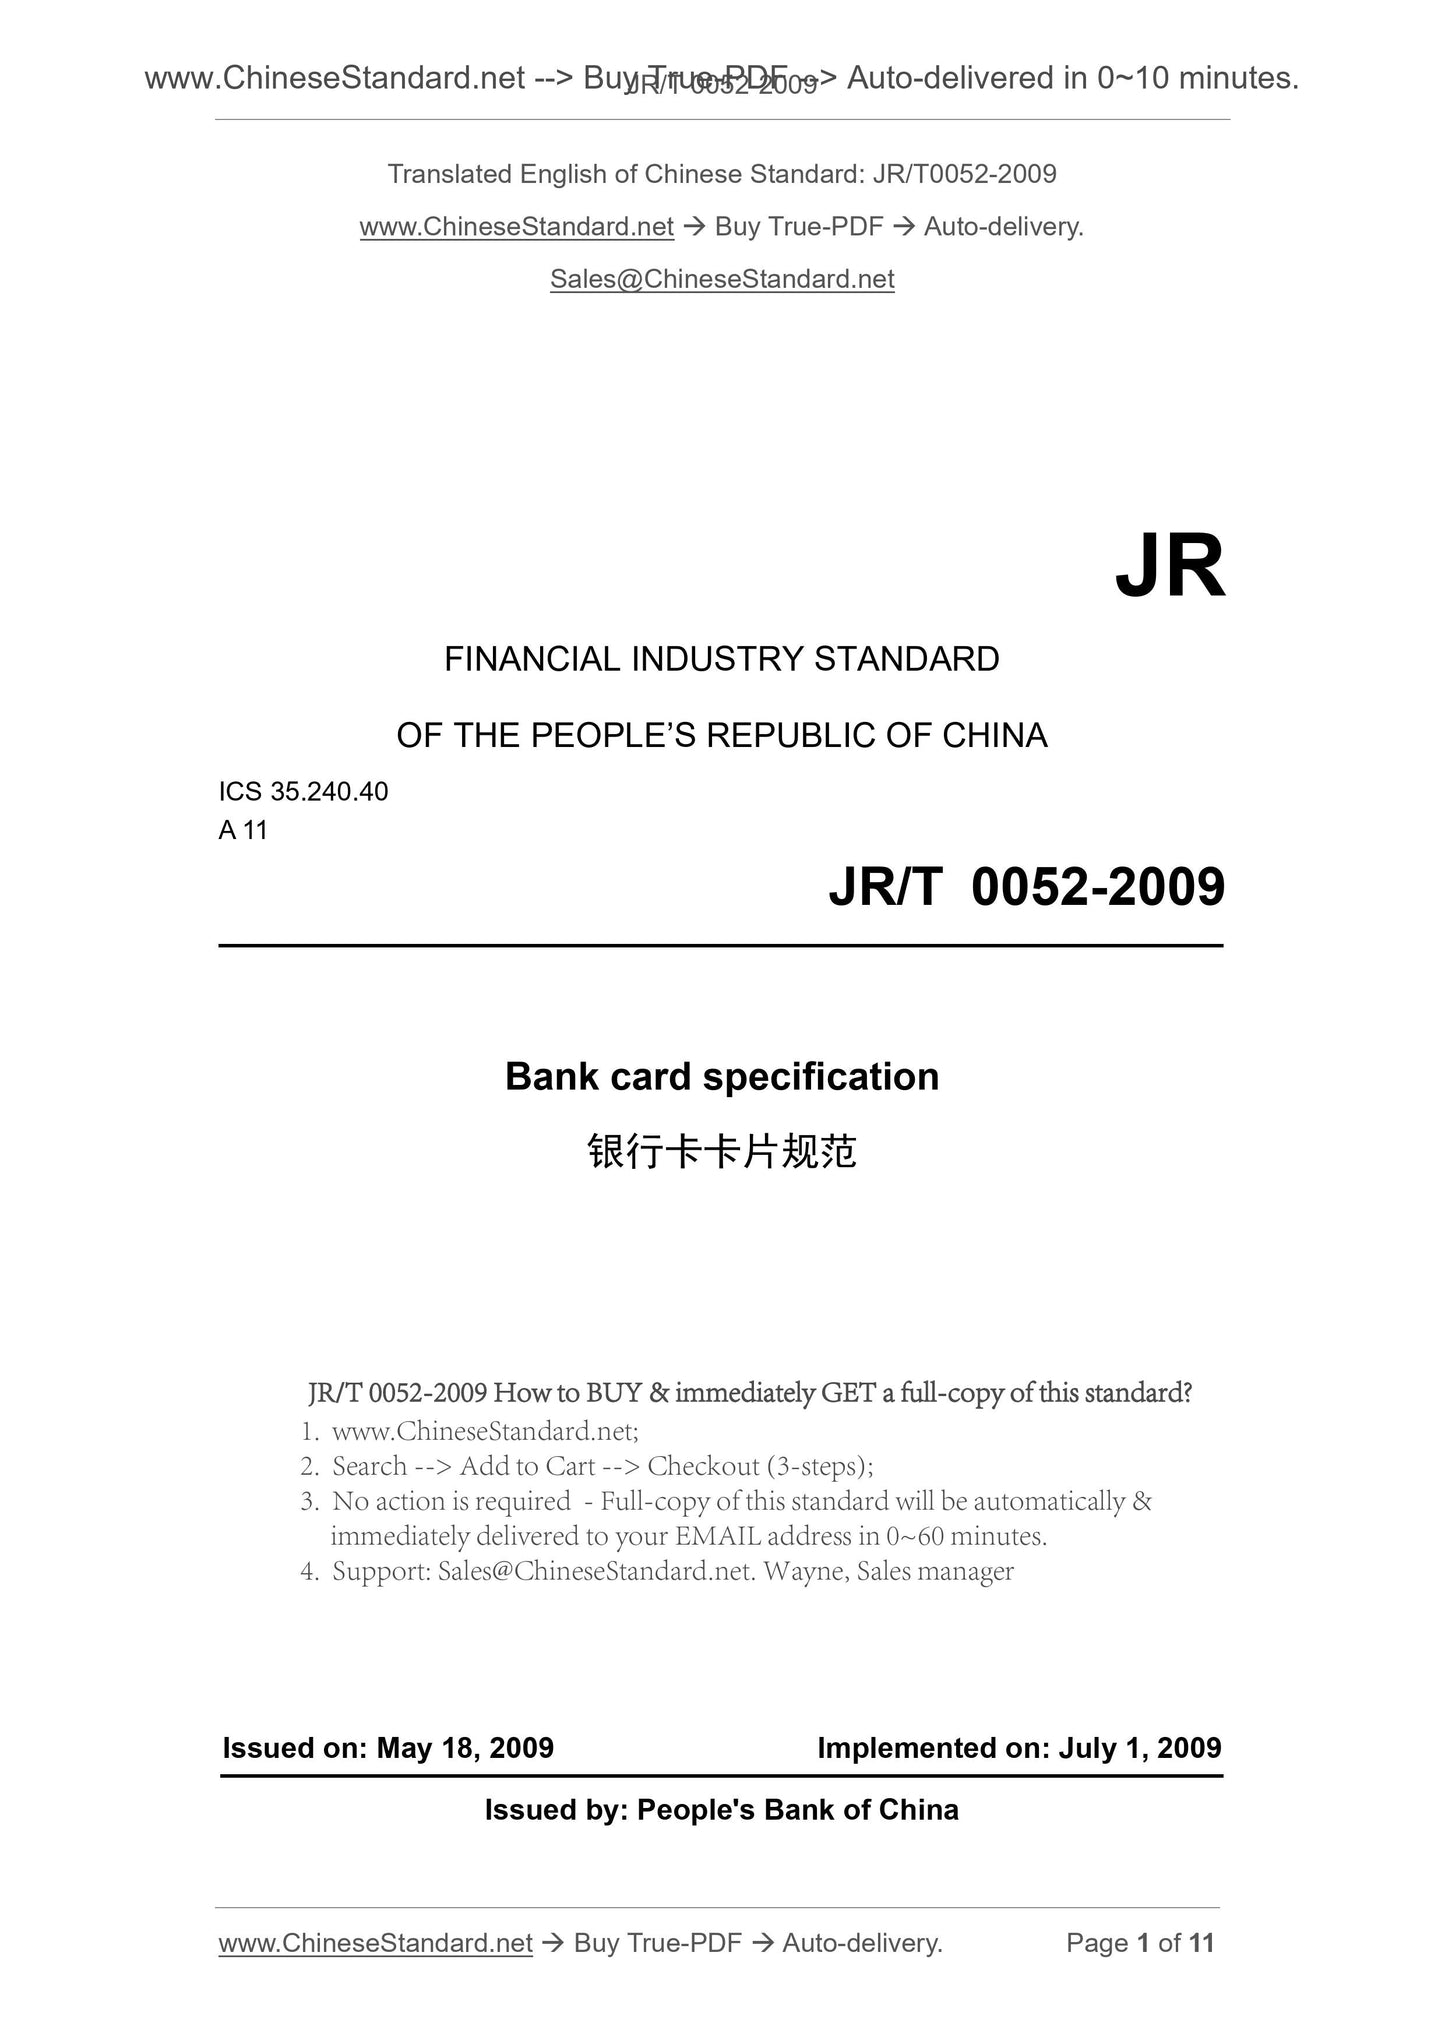 JR/T 0052-2009 Page 1